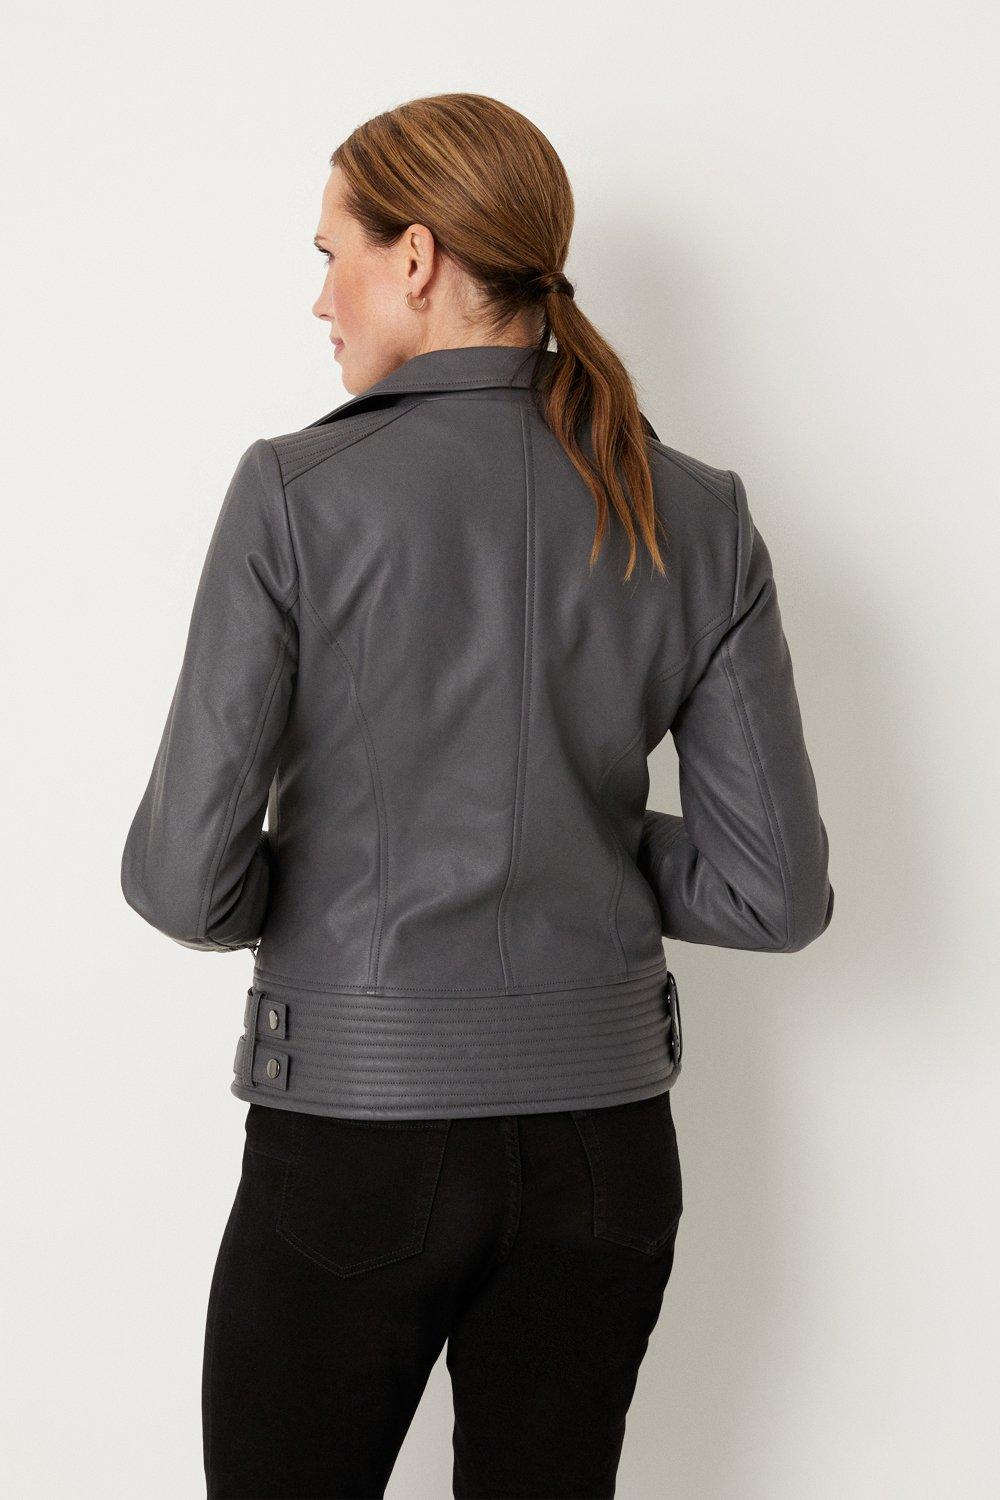 Grey | Leather & Coats Jackets Biker | Jacket Dark Faux Wallis